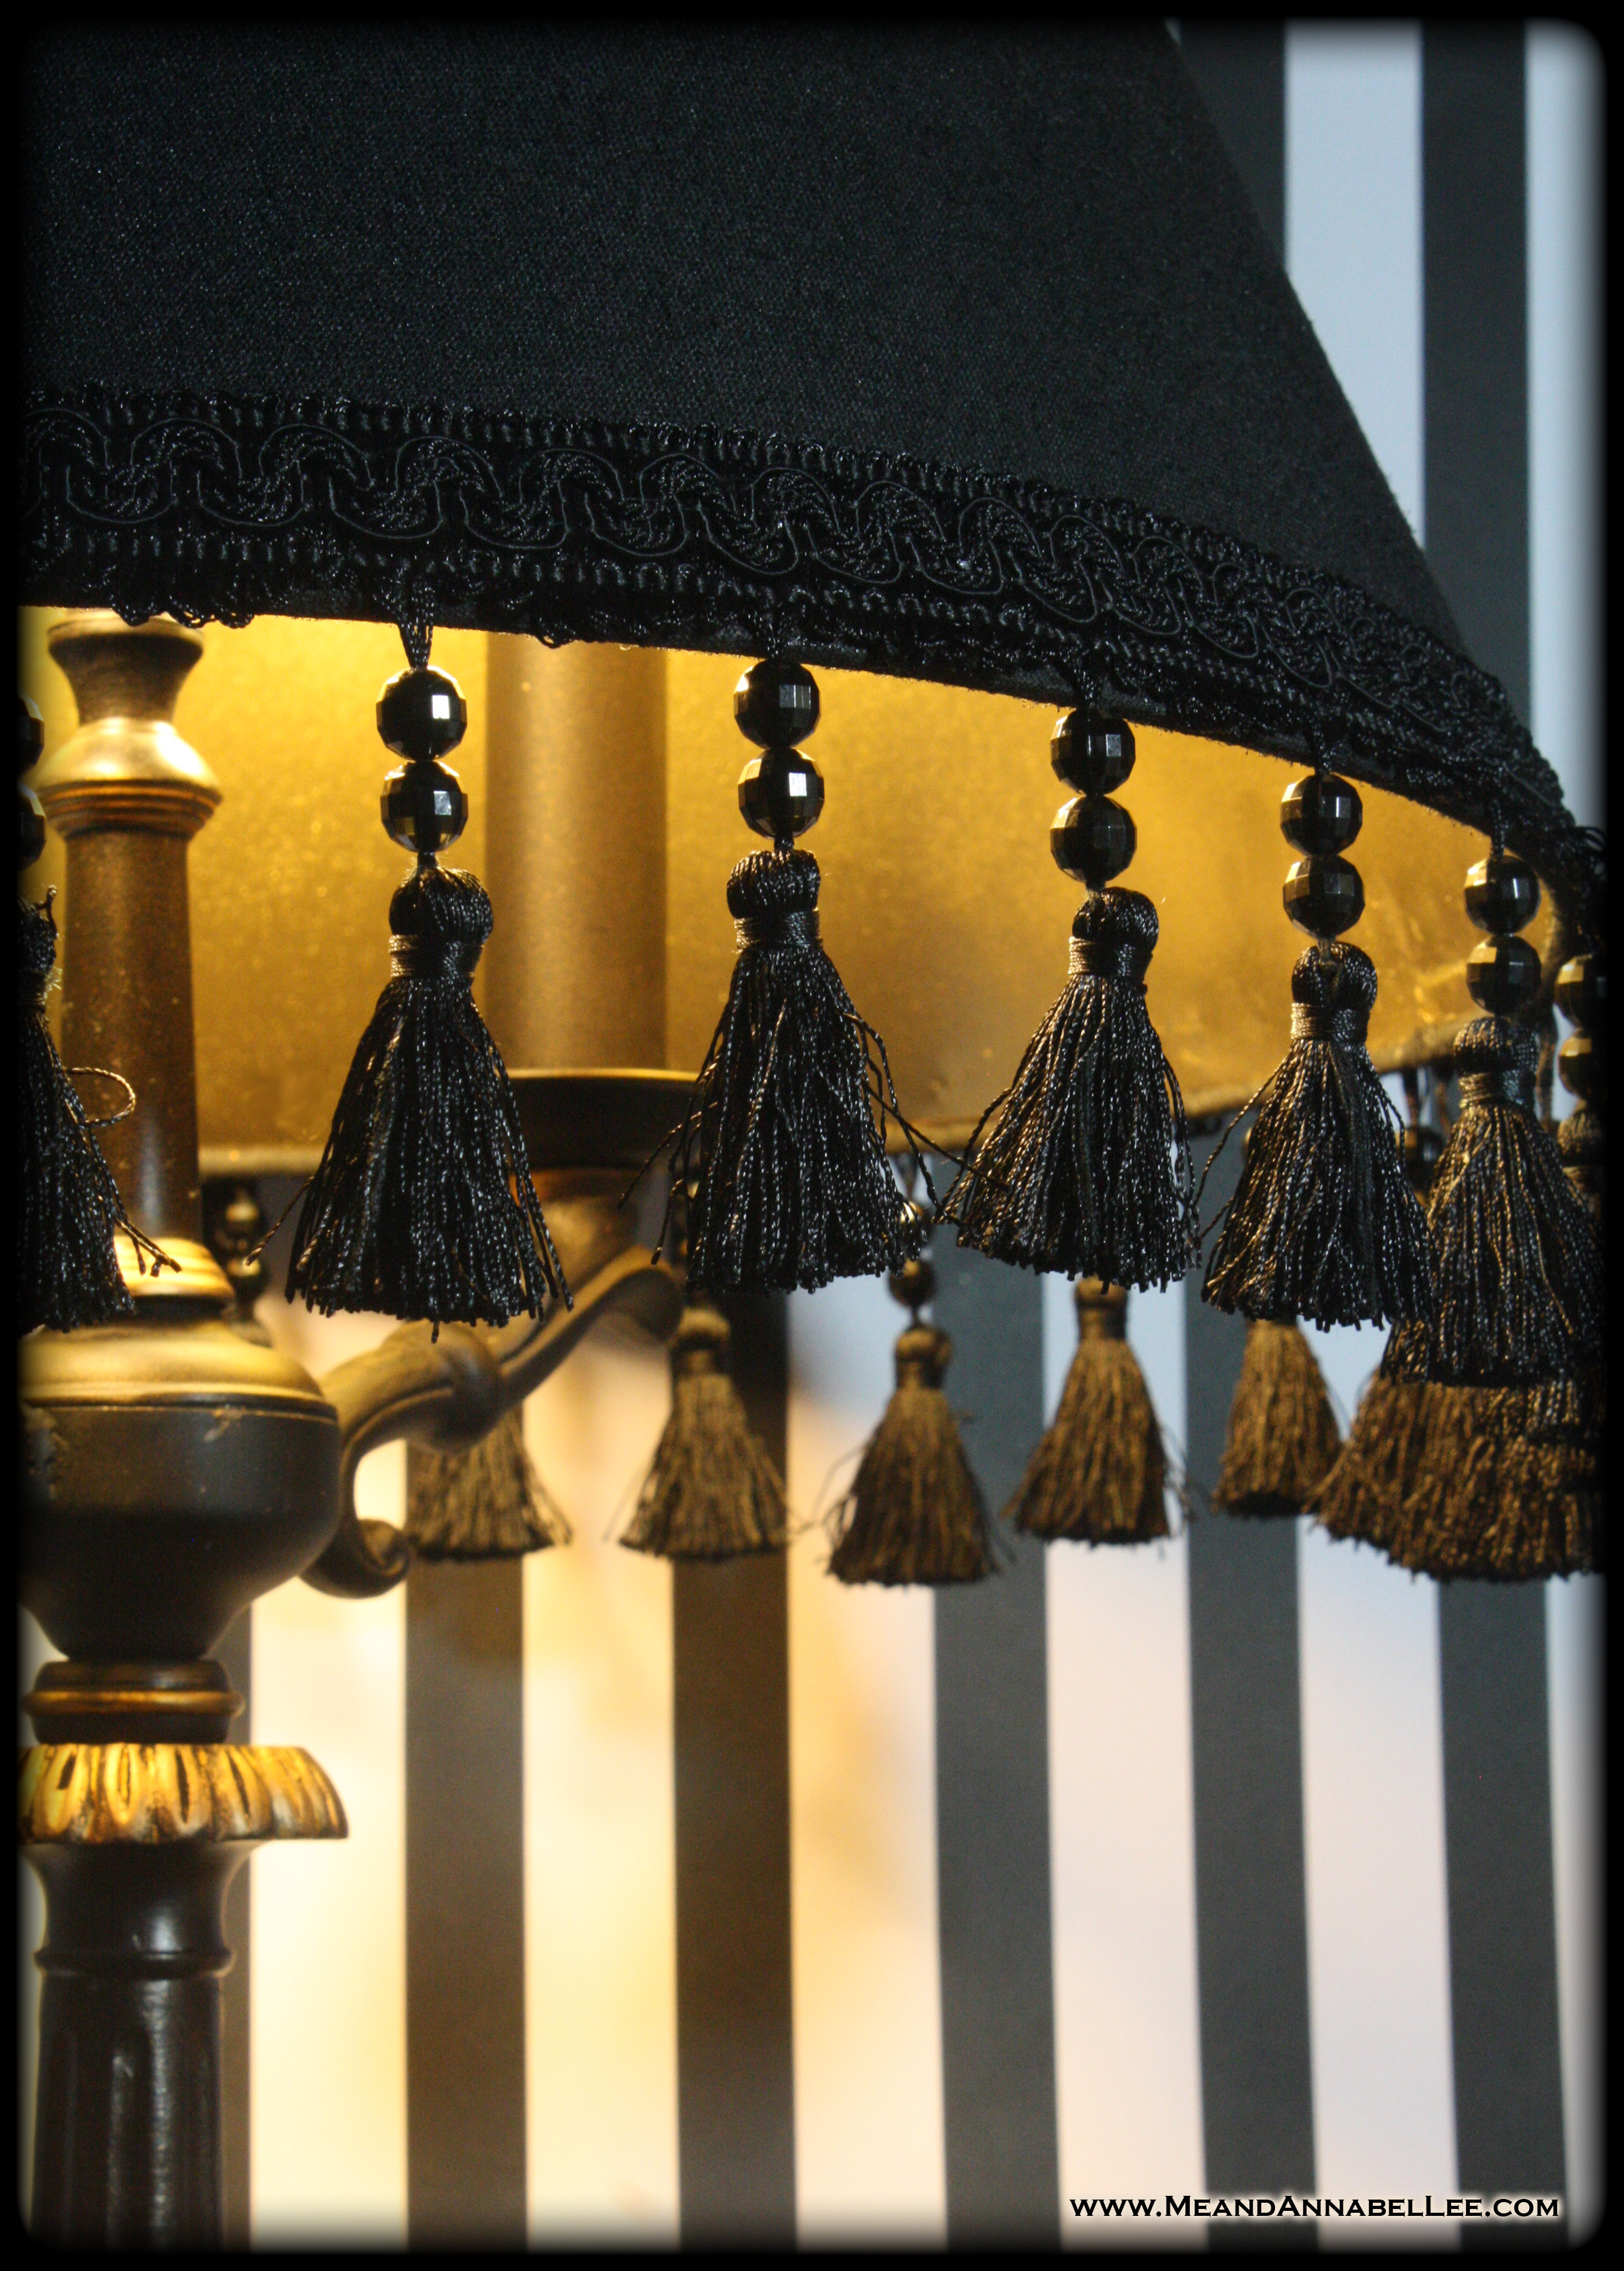 DIY Black Gold Tassel Lamp Shade | Painted Shade Tutorial | www.MeandAnnabelLee.com